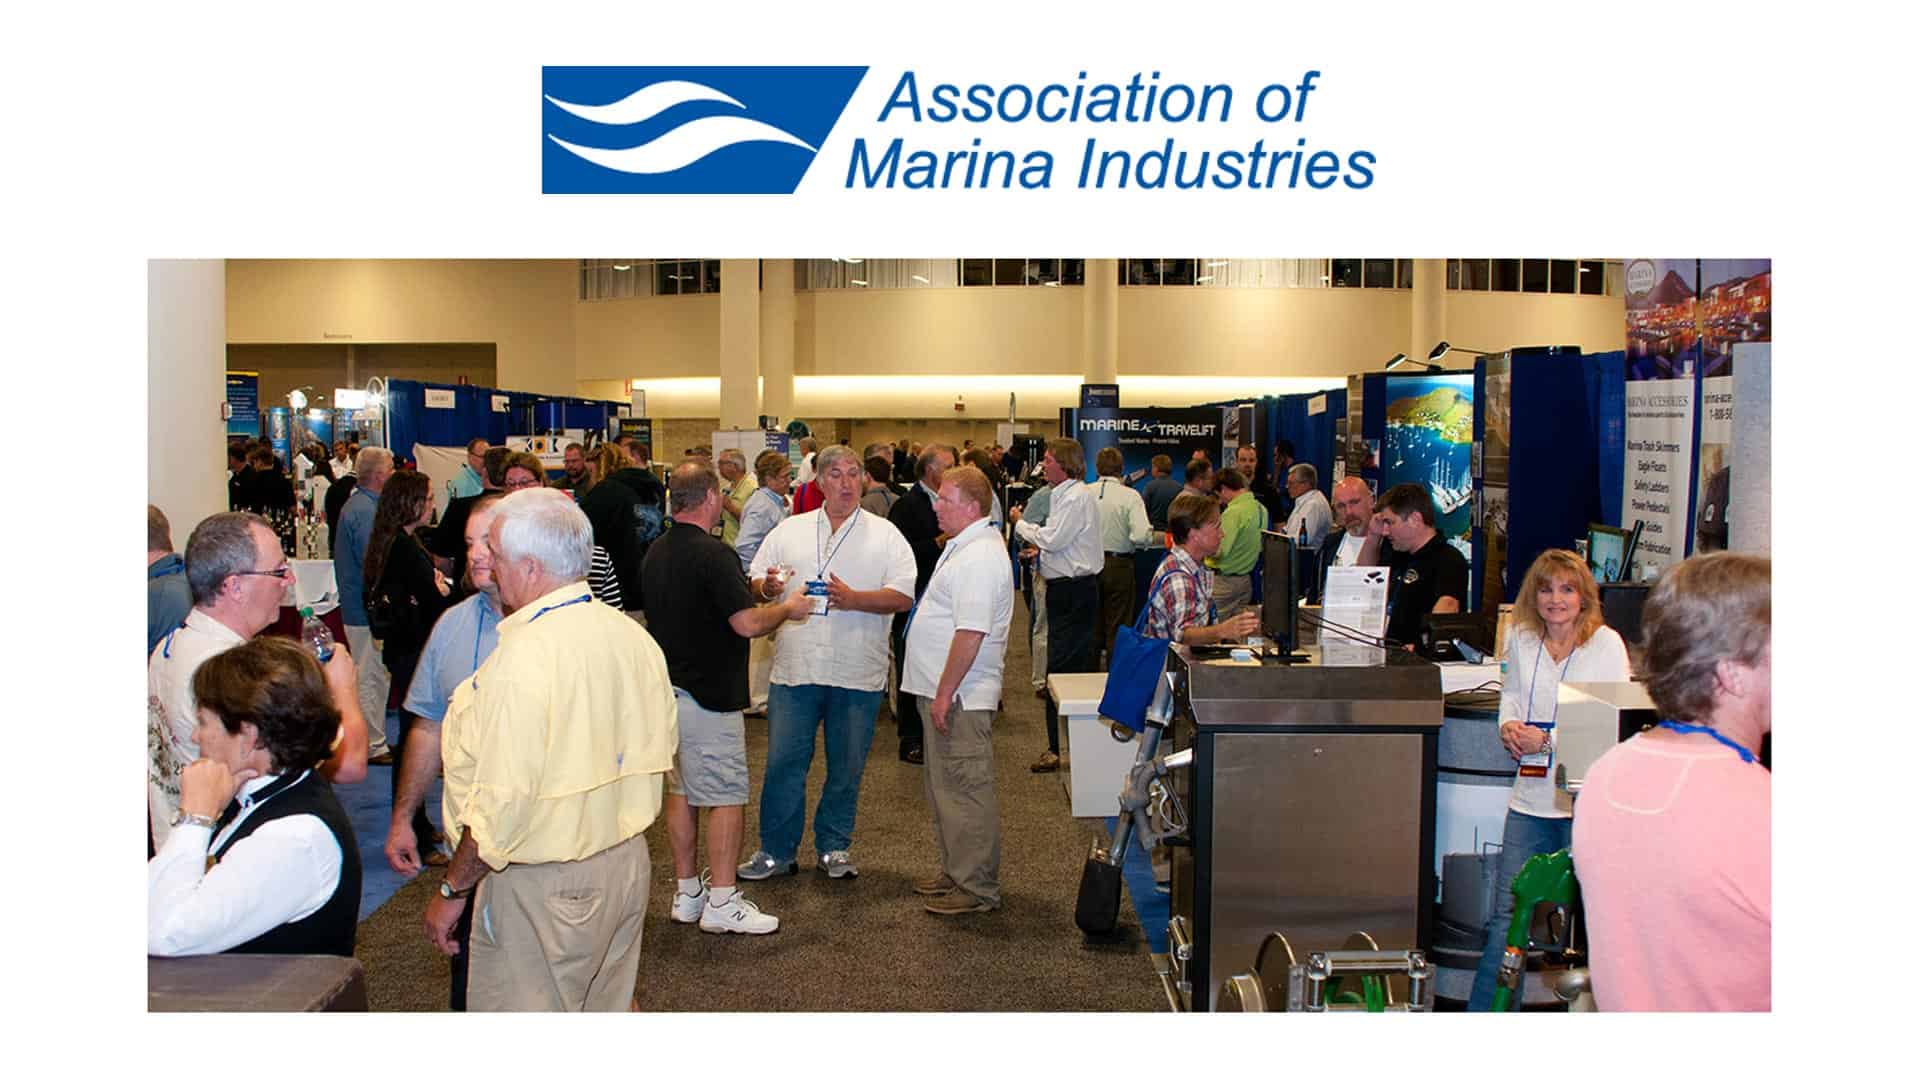 Association of Marina Industries